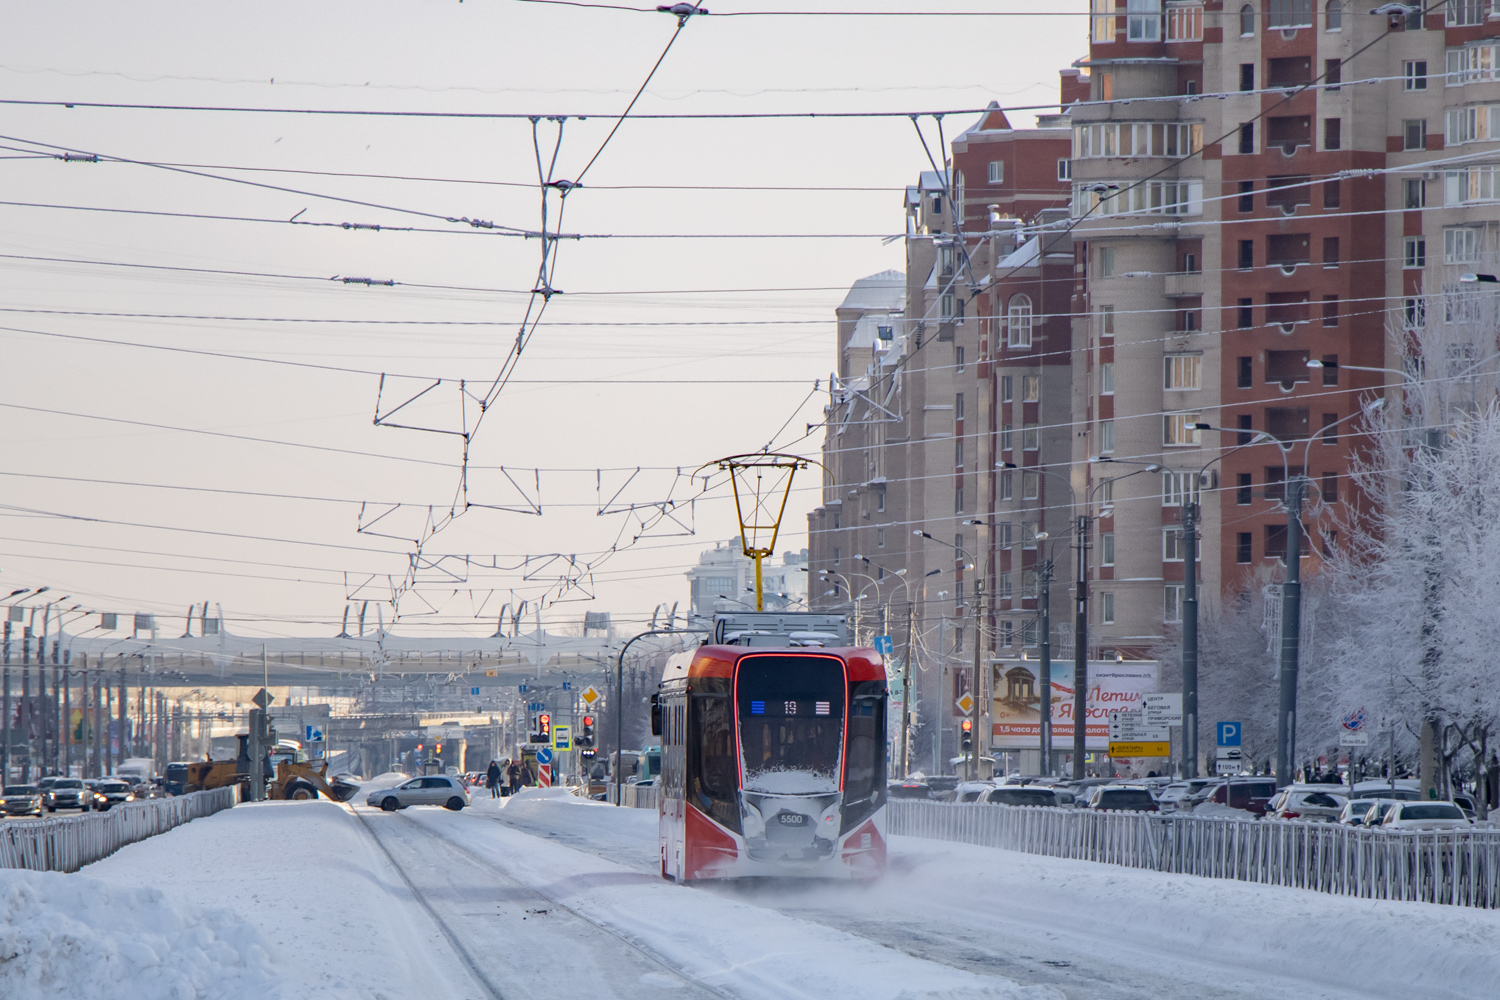 Saint-Pétersbourg, 71-628-02 N°. 5500; Saint-Pétersbourg — Tram lines and infrastructure